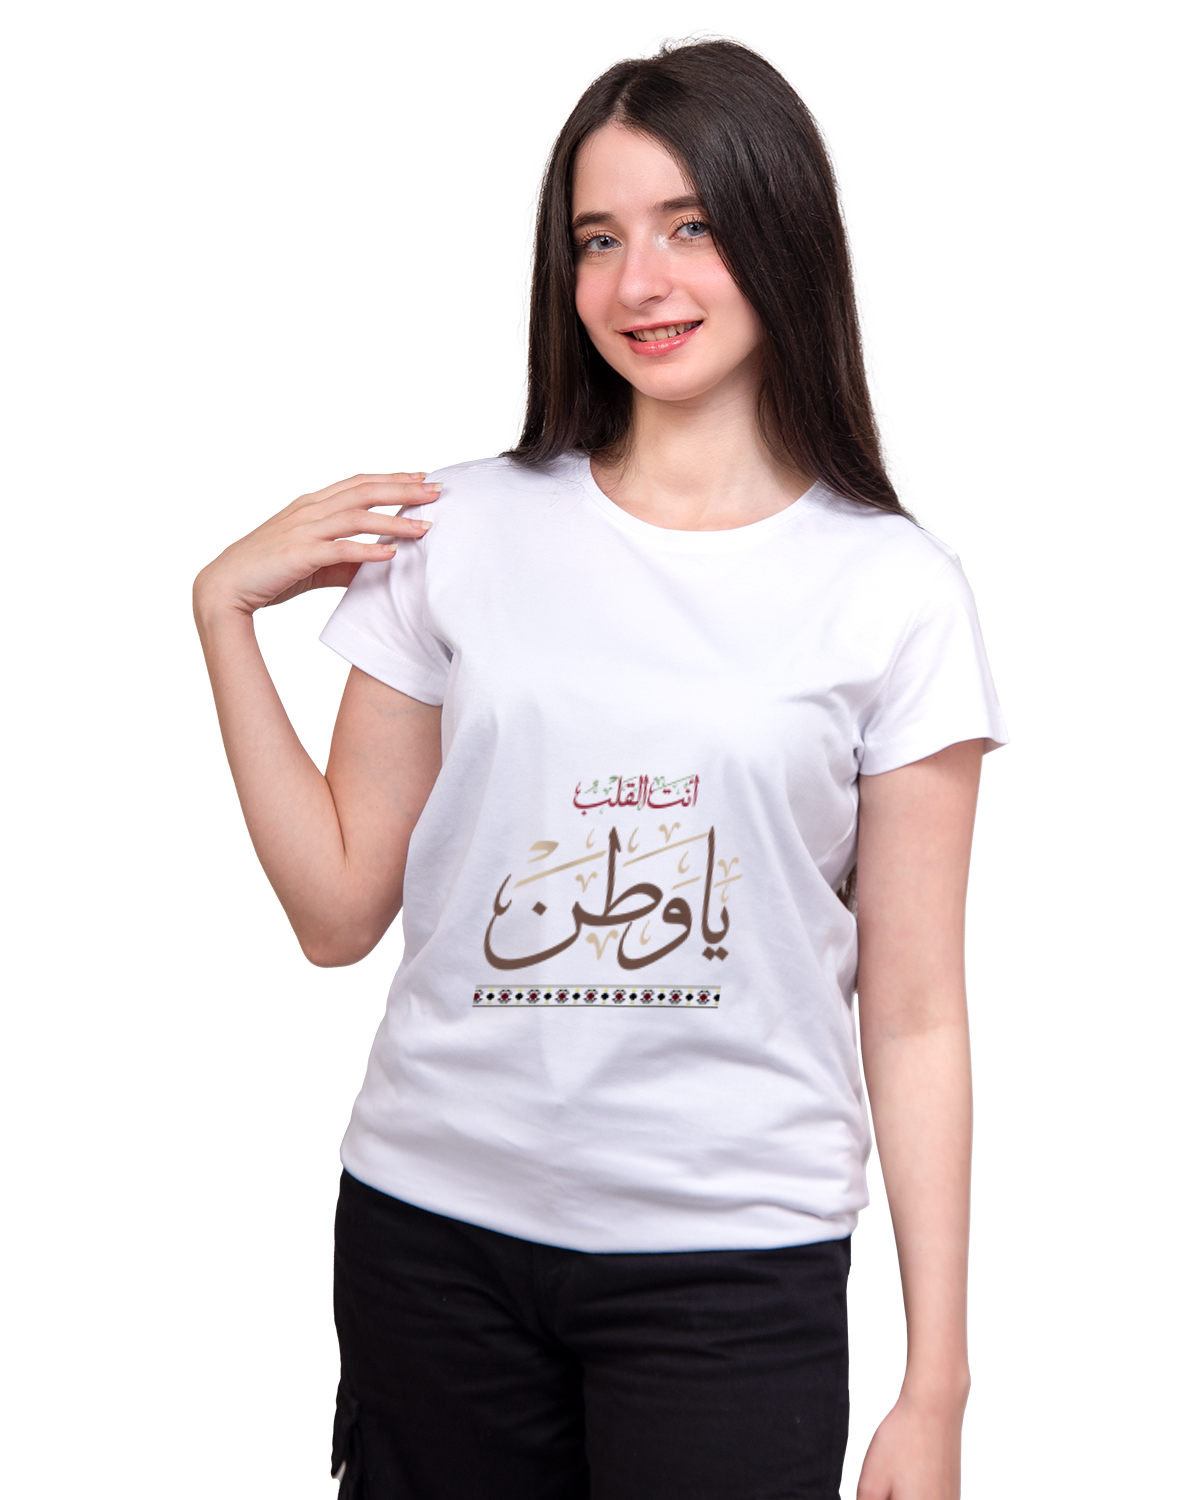 Women's Foundation Day T-shirt (Ant Alqalb Ya Watan)